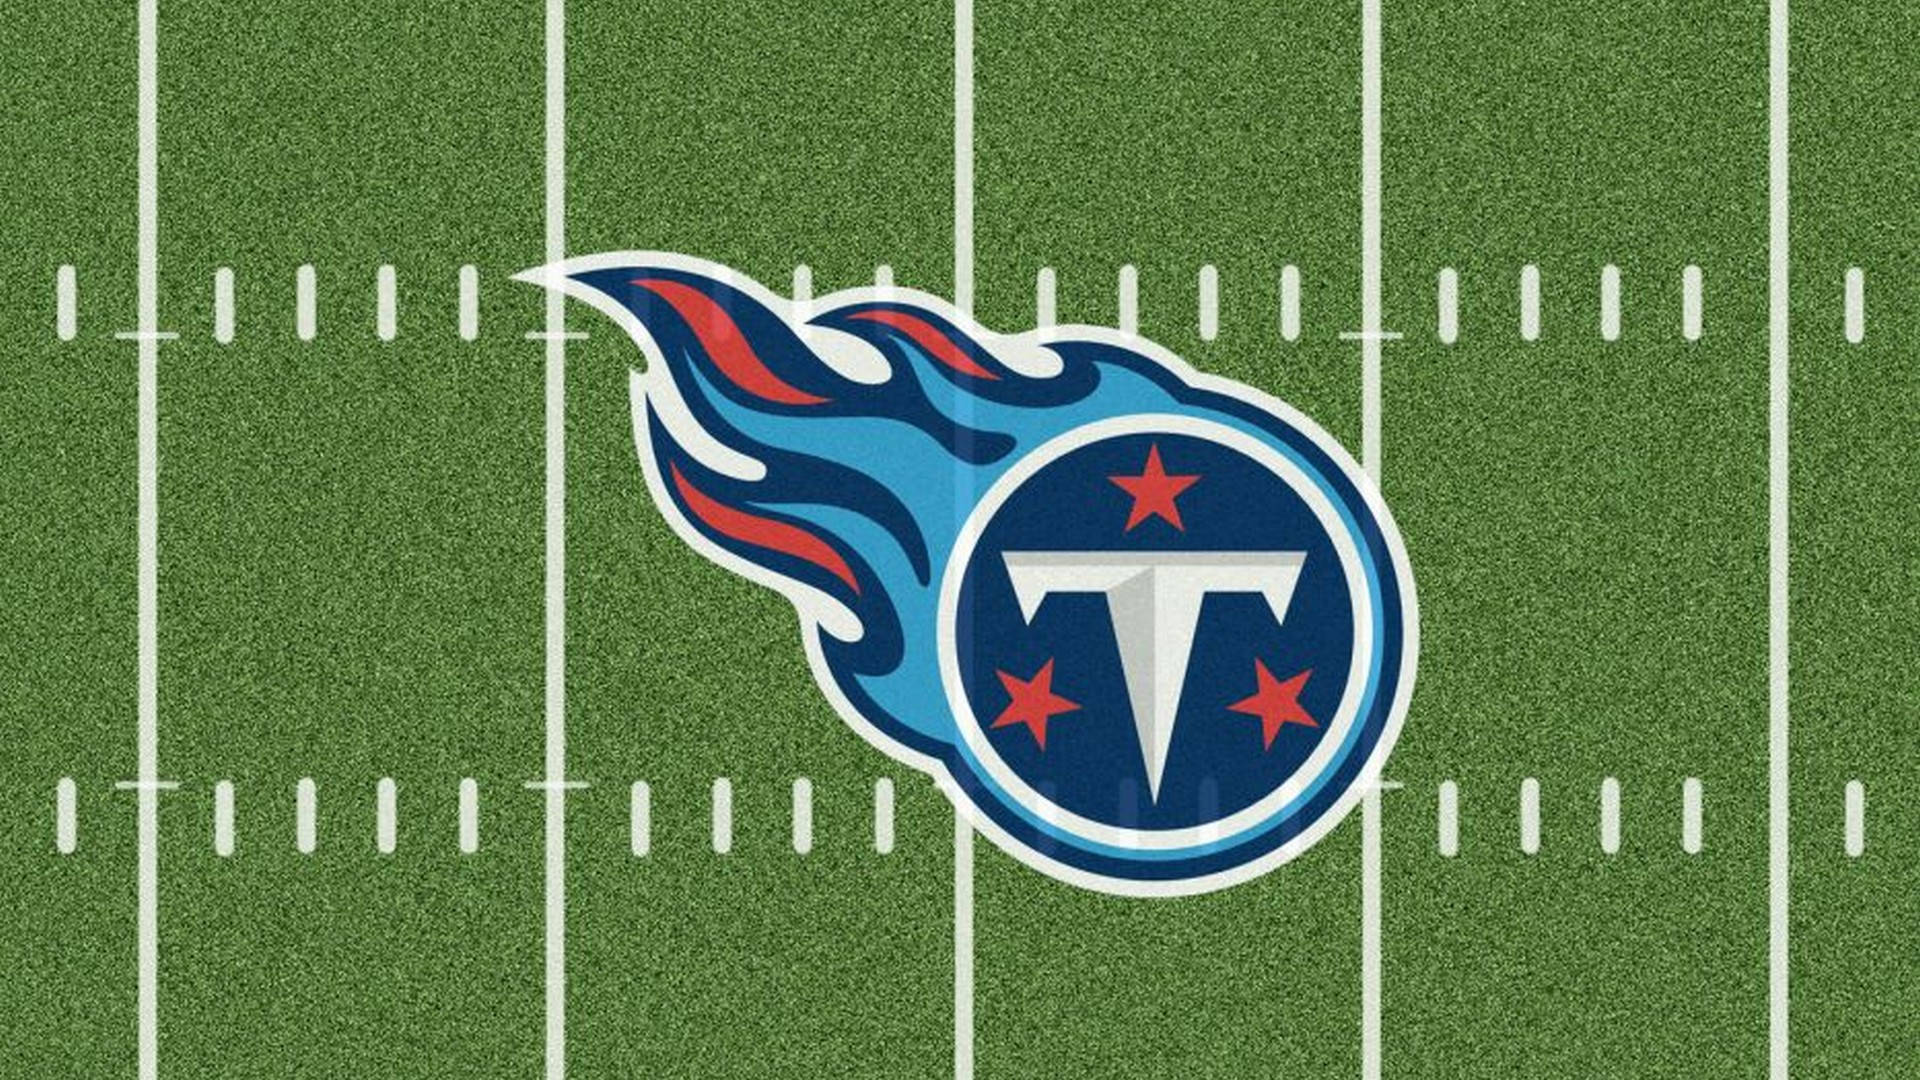 Tennessee Titans Football Field Wallpaper